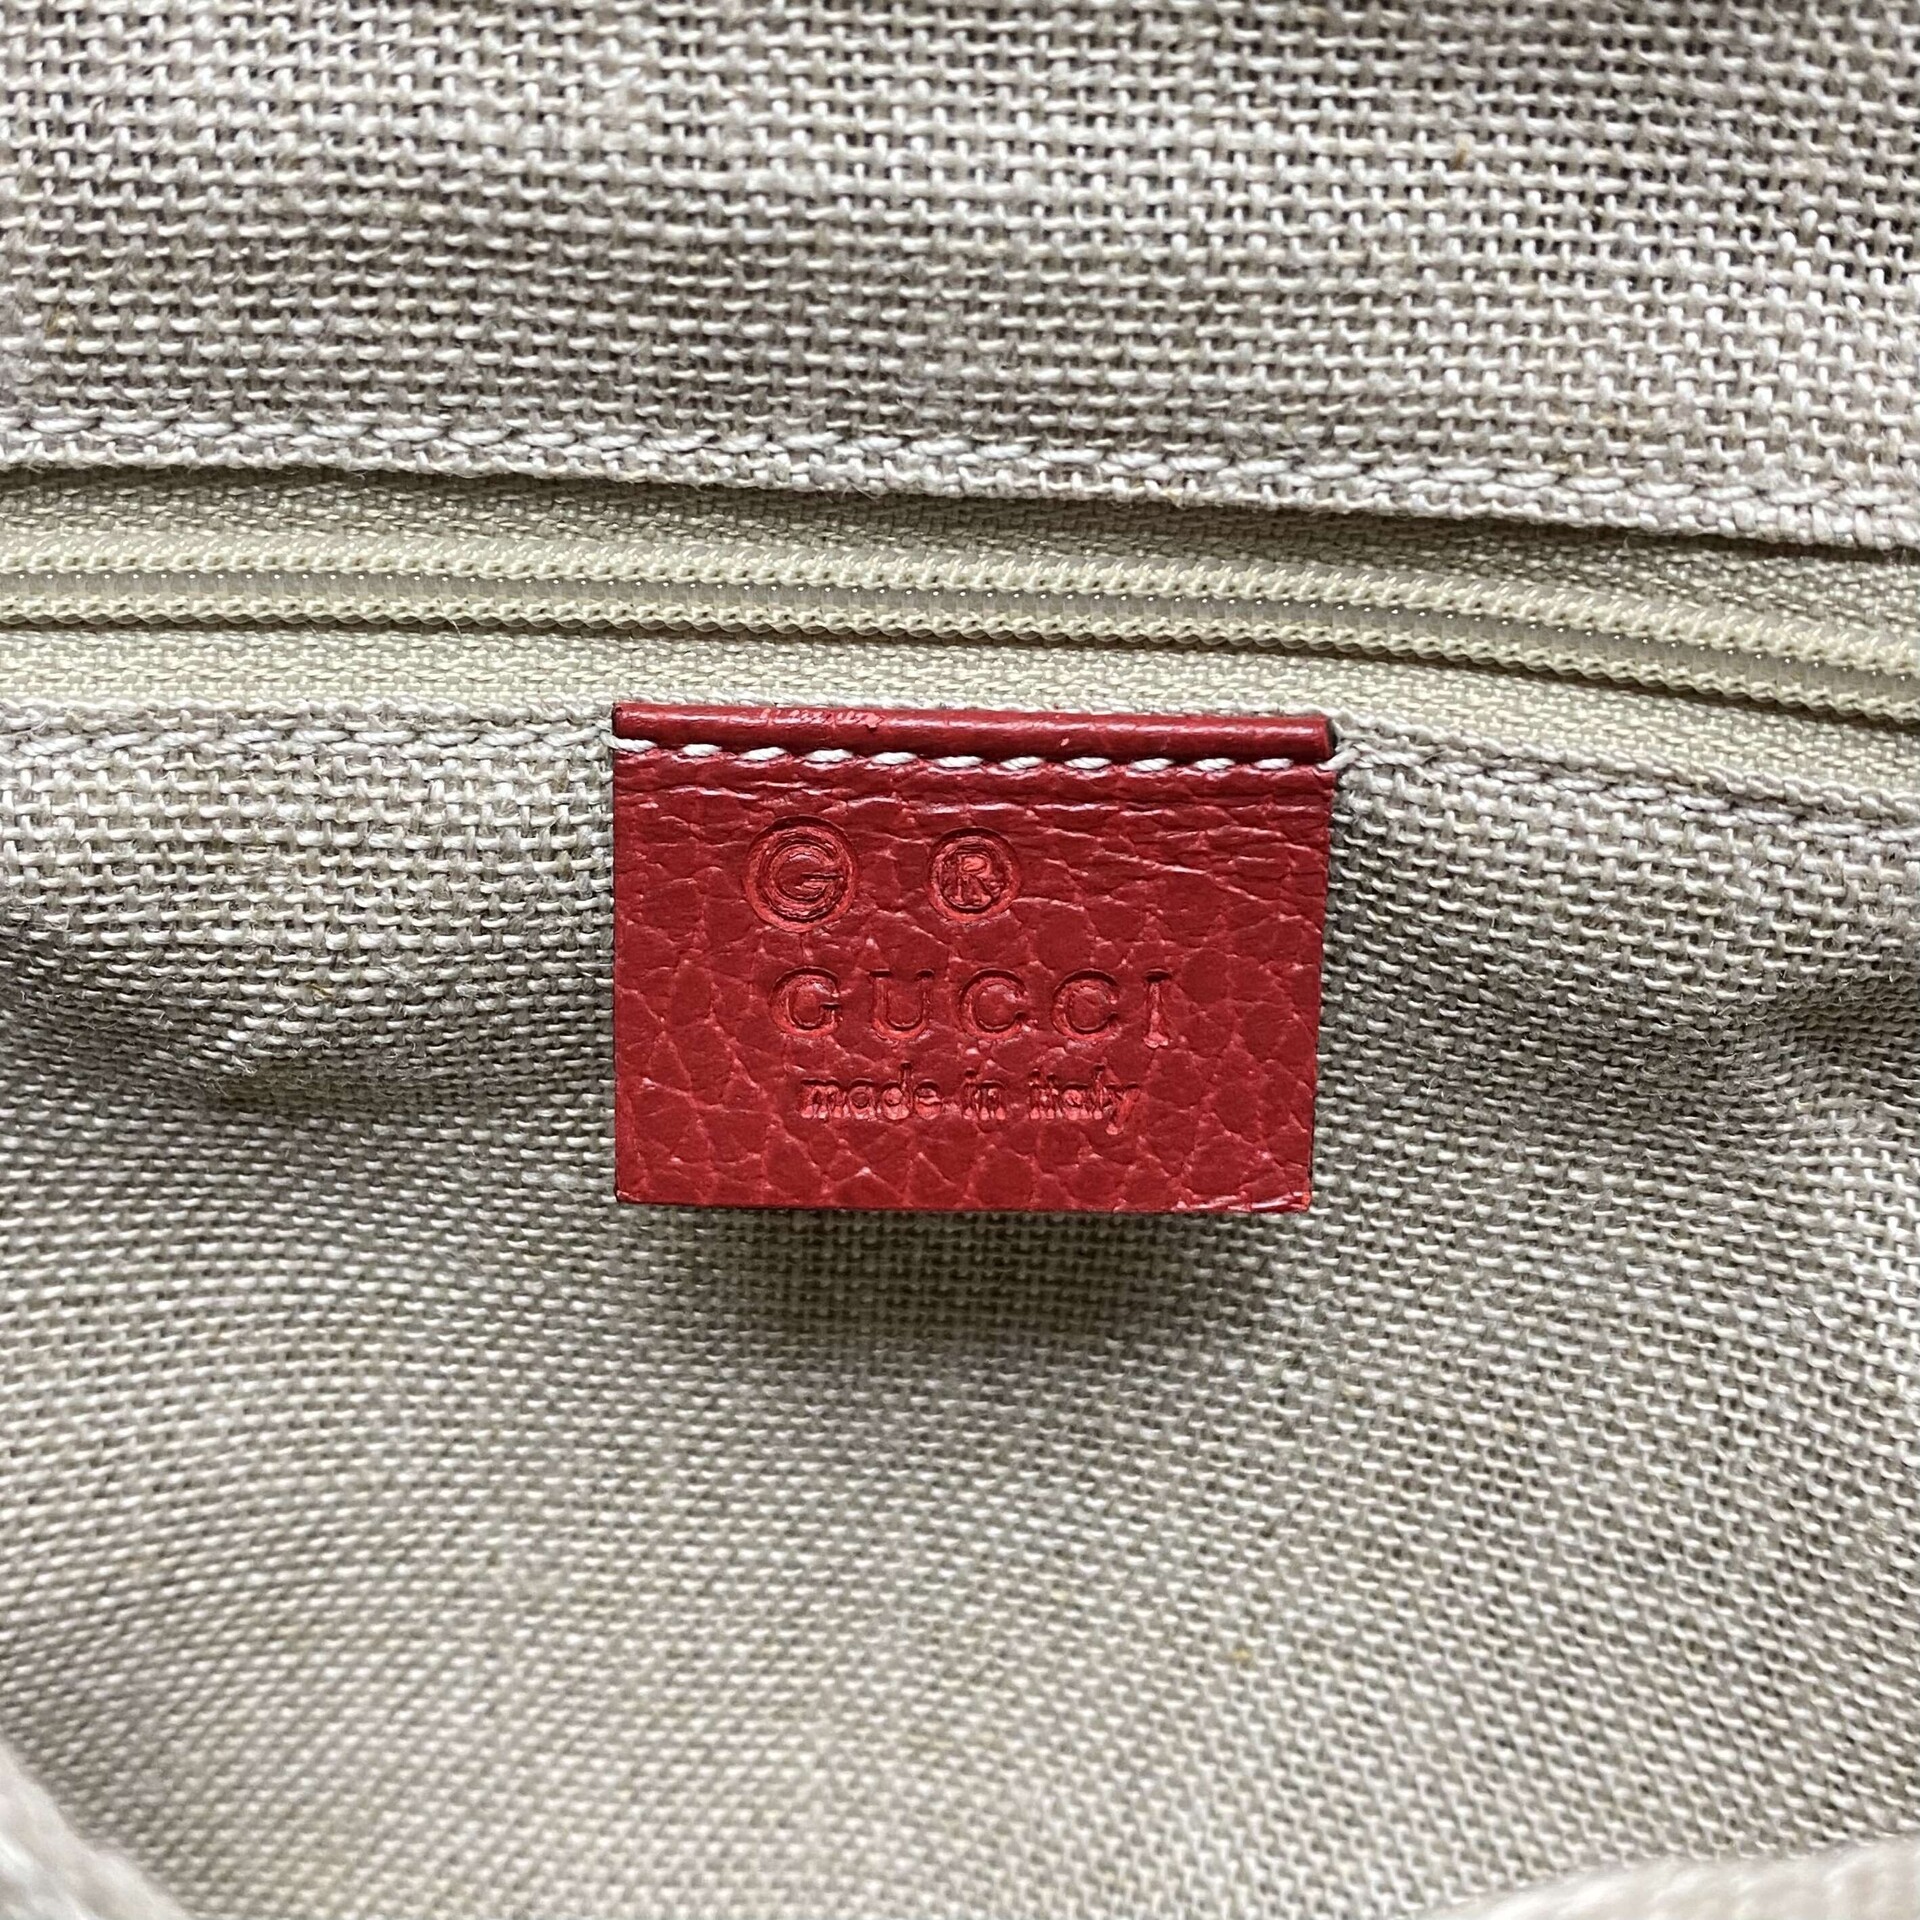 Bolsa Gucci Interlocking Vermelha